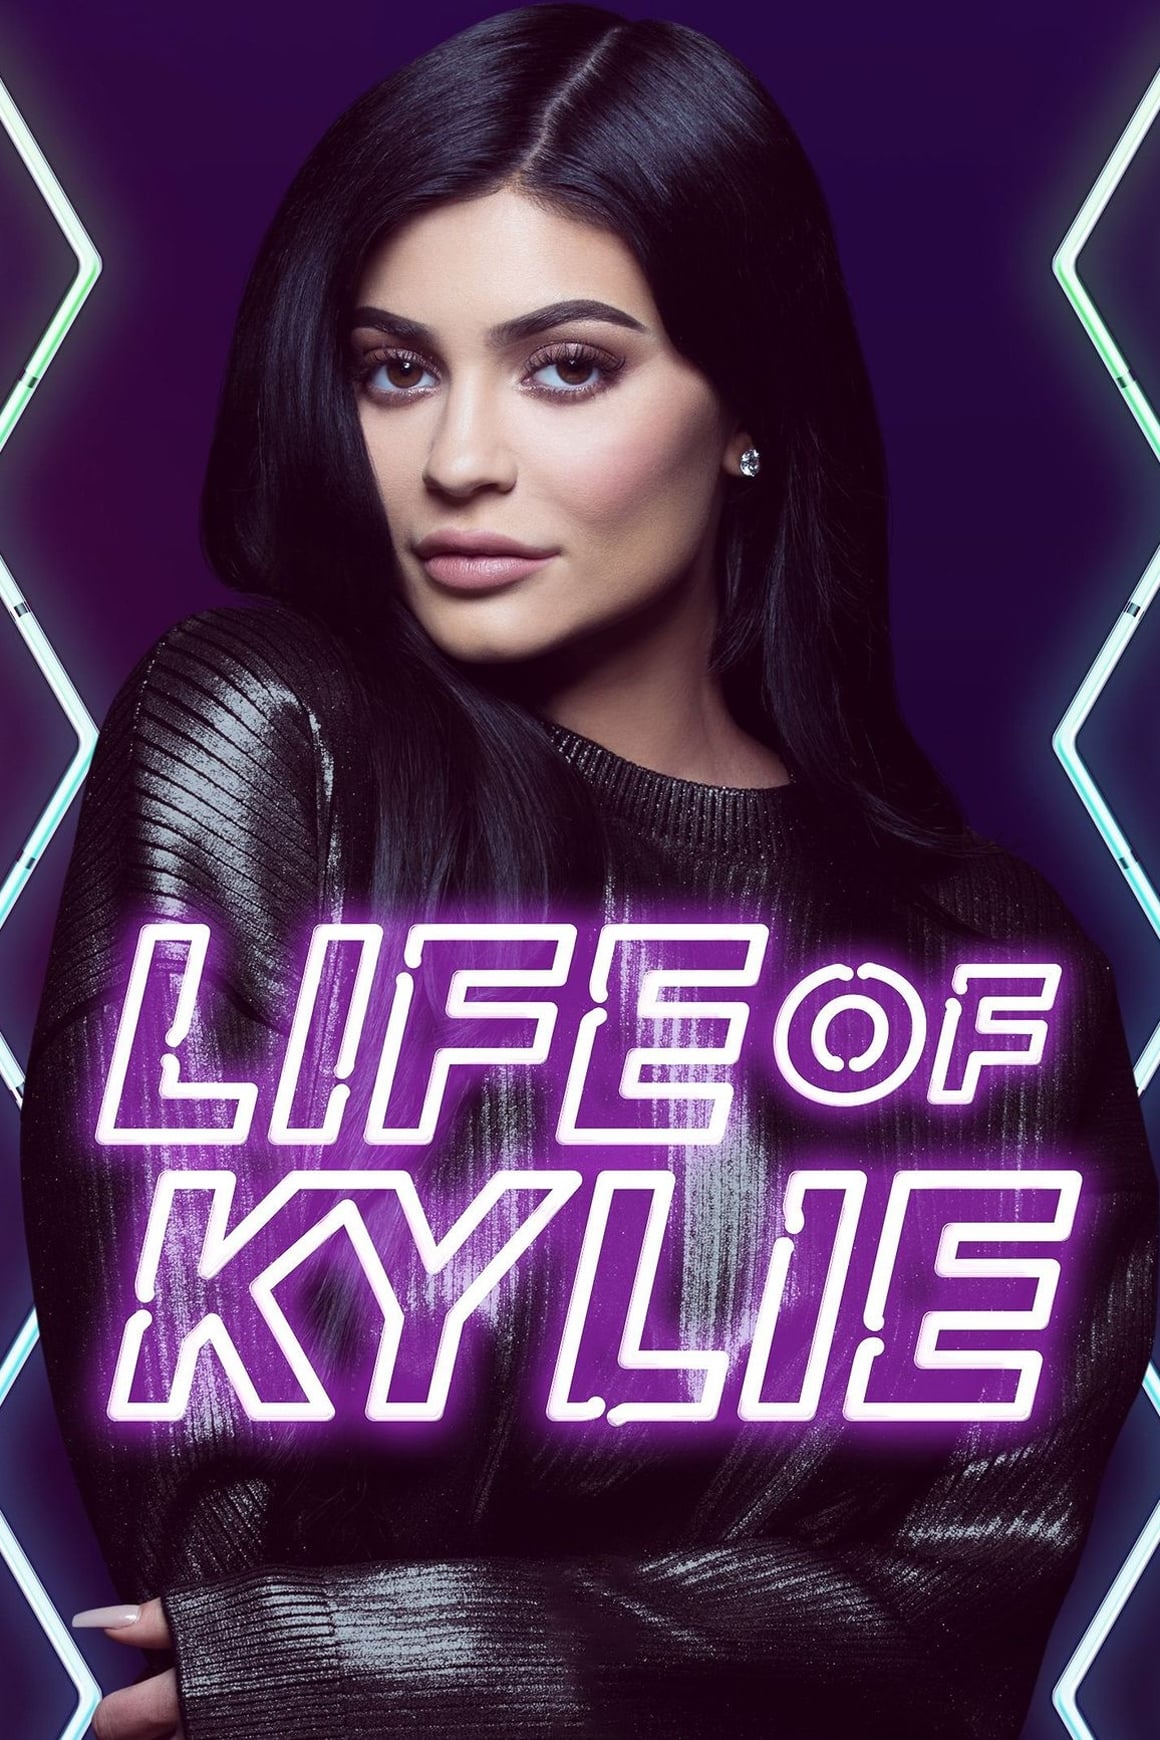 La Vida de Kylie